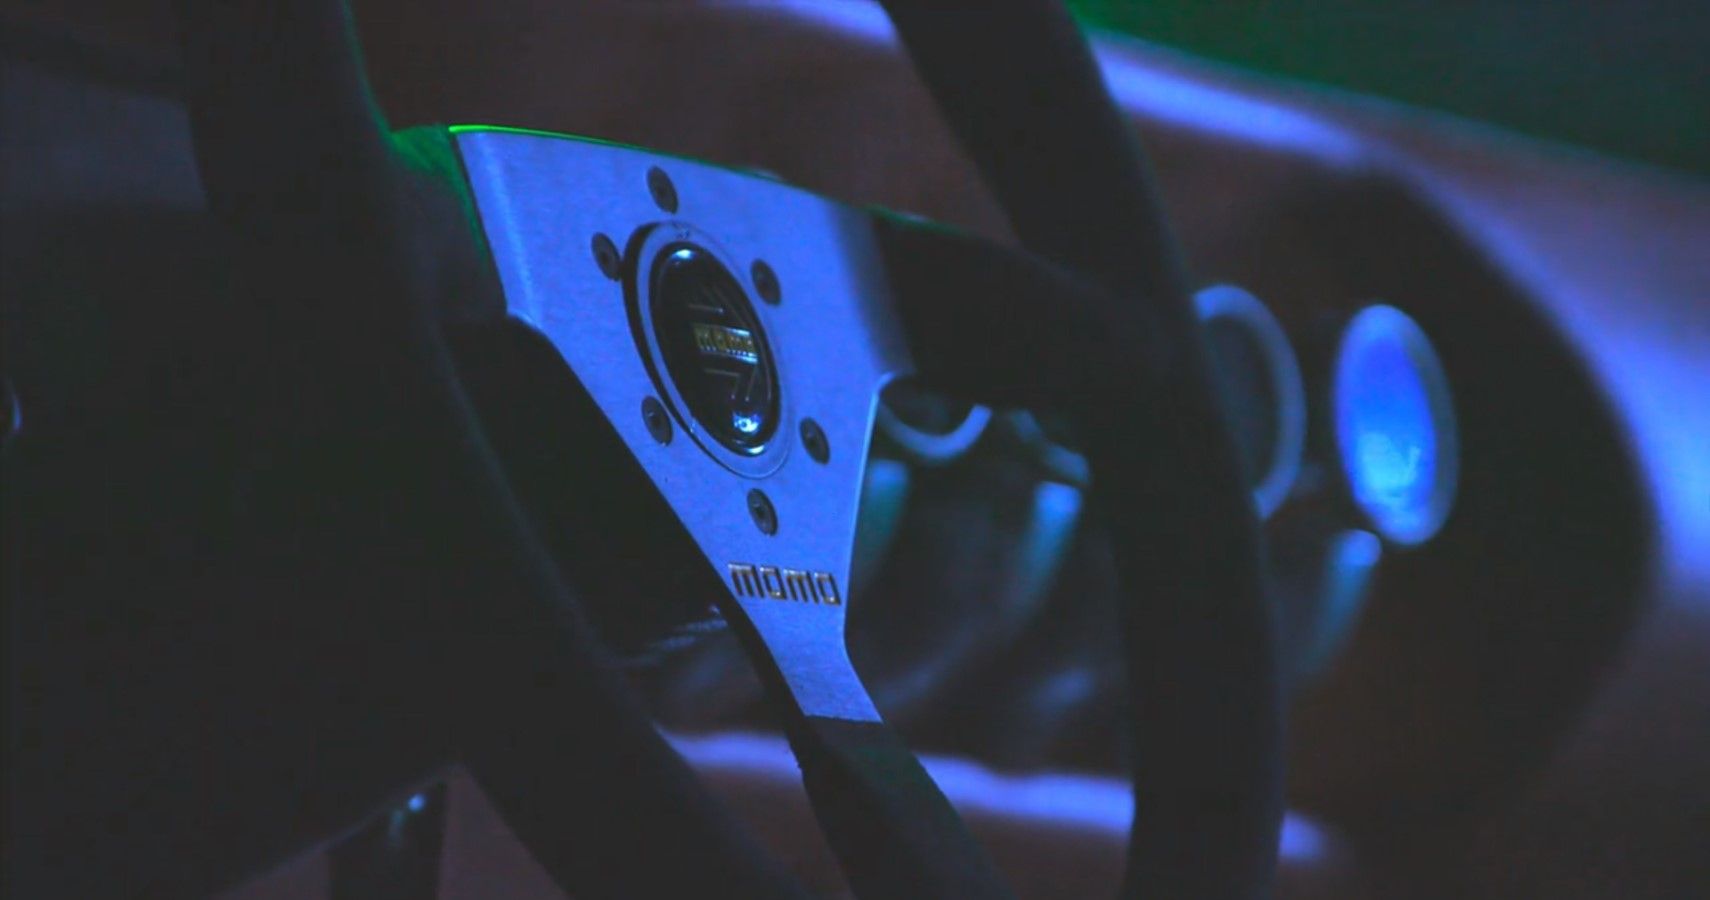 Gotham Garage Chevy Corvette Mako Shark 2 Build Momo steering wheel close-up view